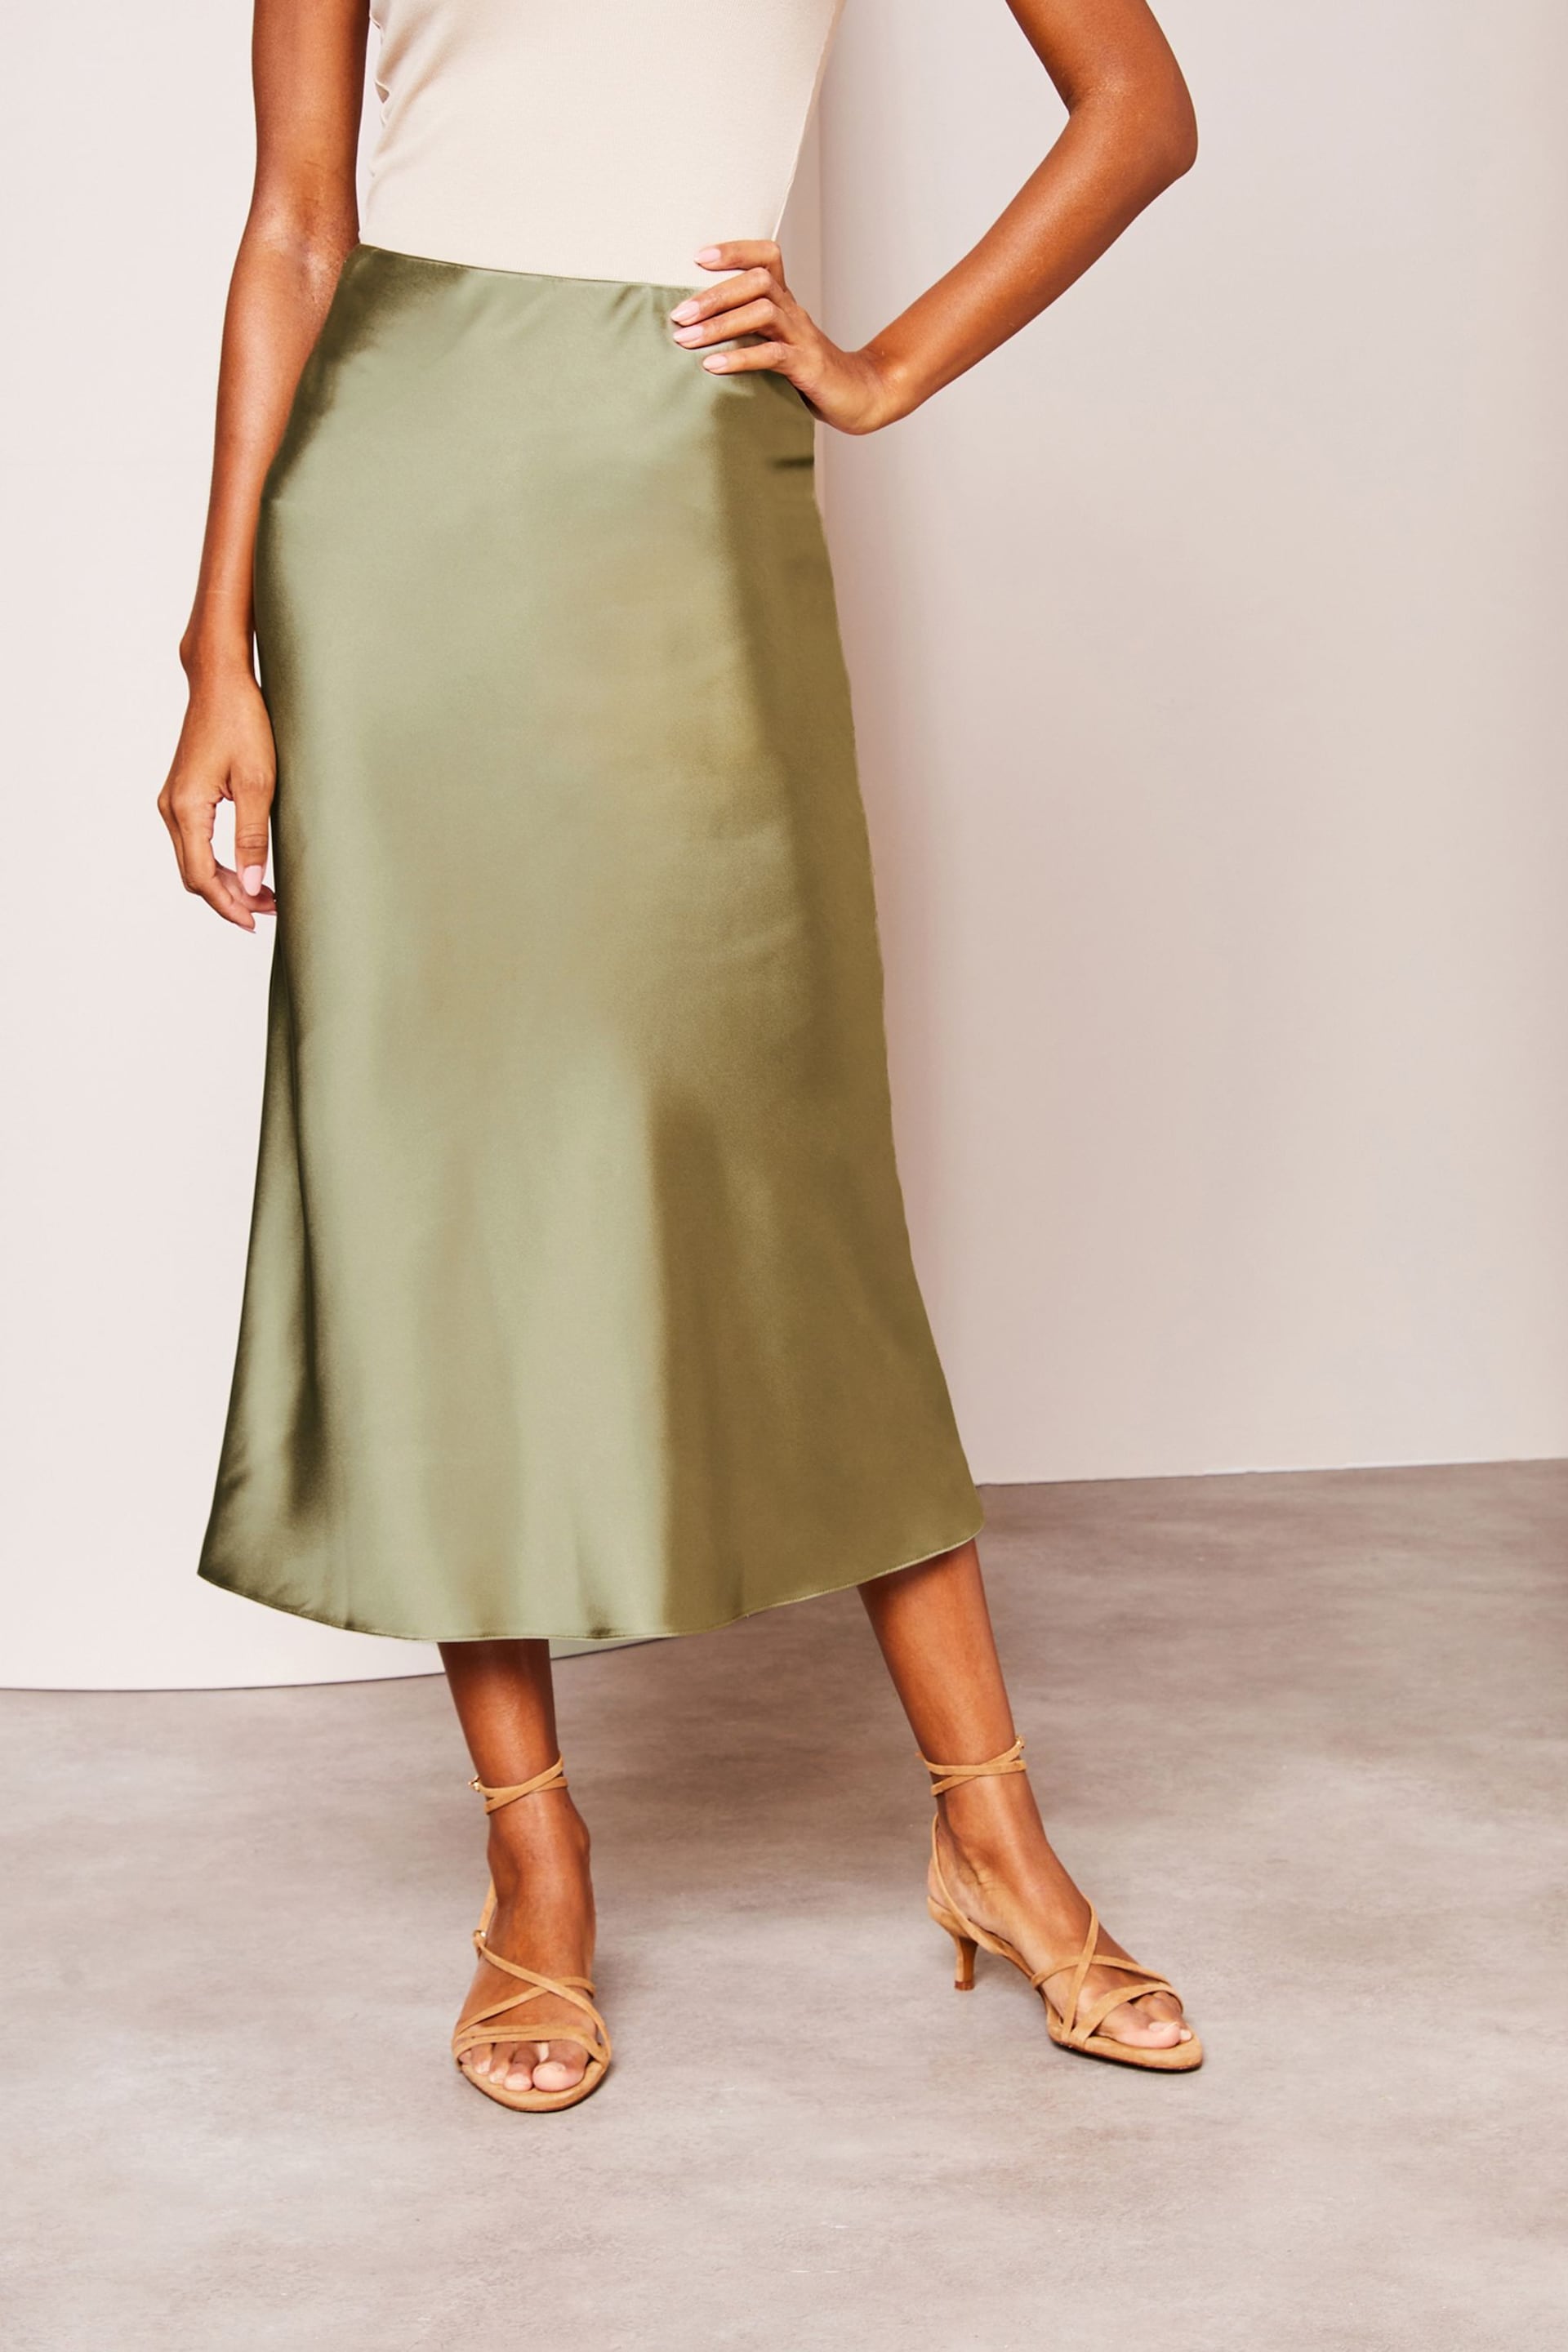 Lipsy Khaki Green Satin Bias Cut Midi Skirt - Image 3 of 4